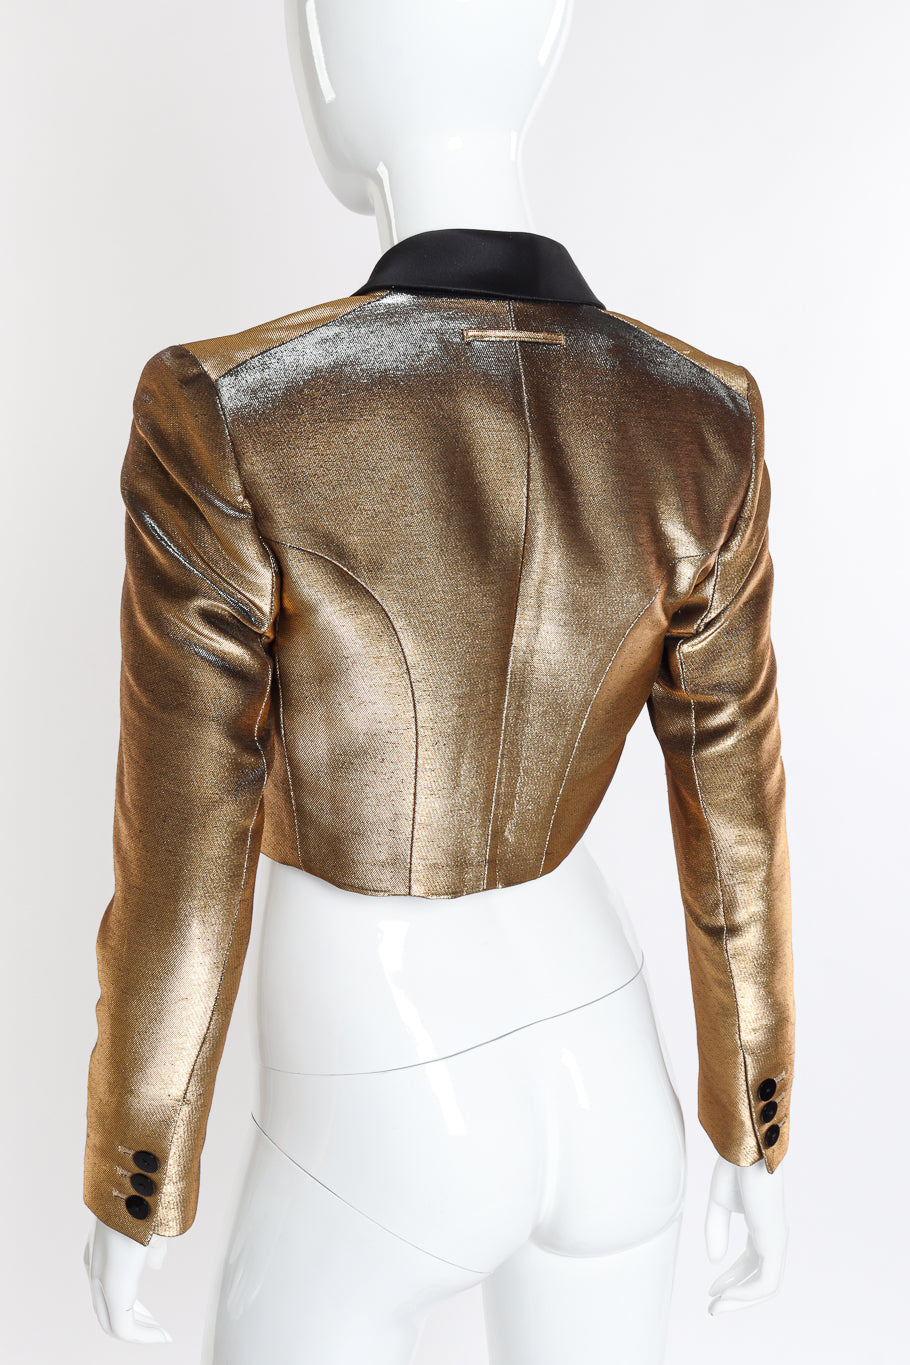 Jean Paul Gaultier Femme Cropped Lamé Tuxedo Jacket back on mannequin closeup @recessla